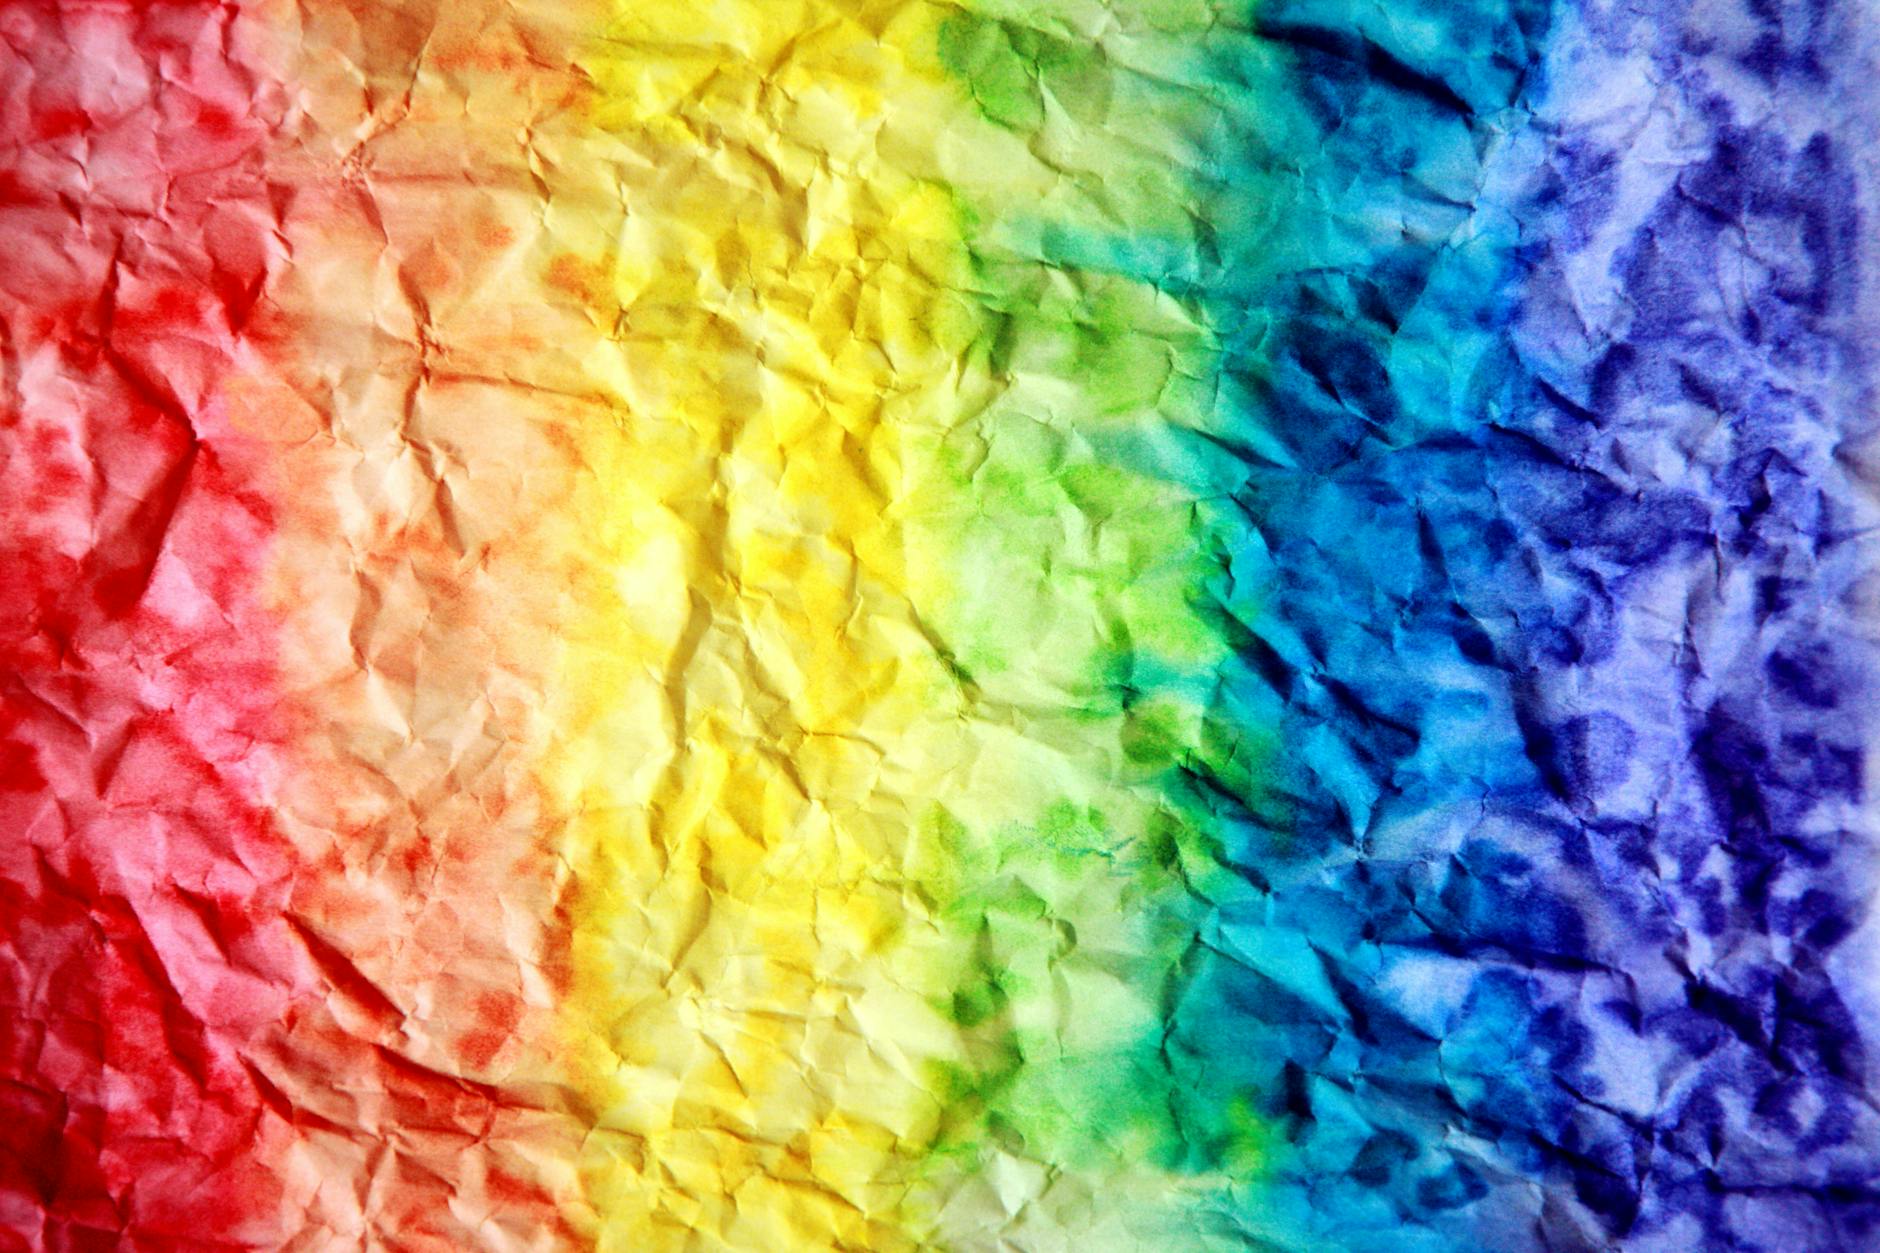 Rainbow Painting · Free Stock Photo